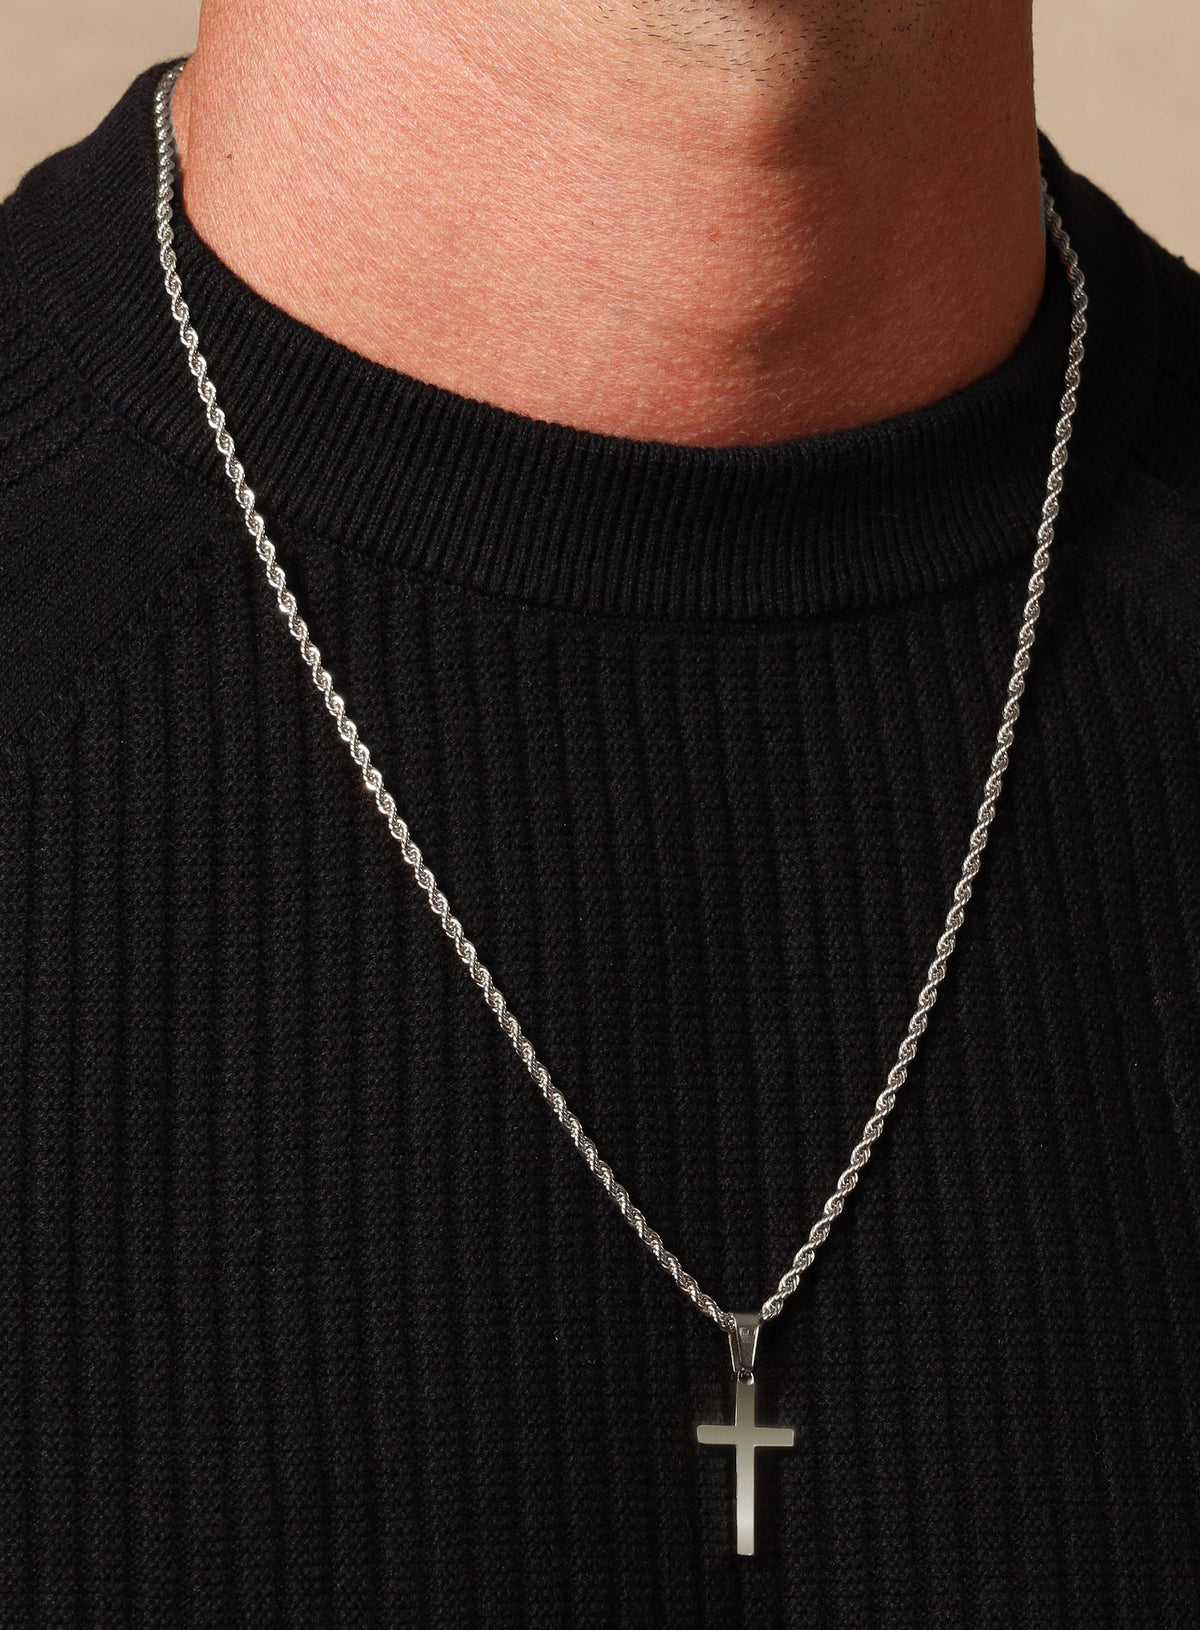 1X Men's design matte black long necklace with arrow pendant jewelry chain  giftk | eBay